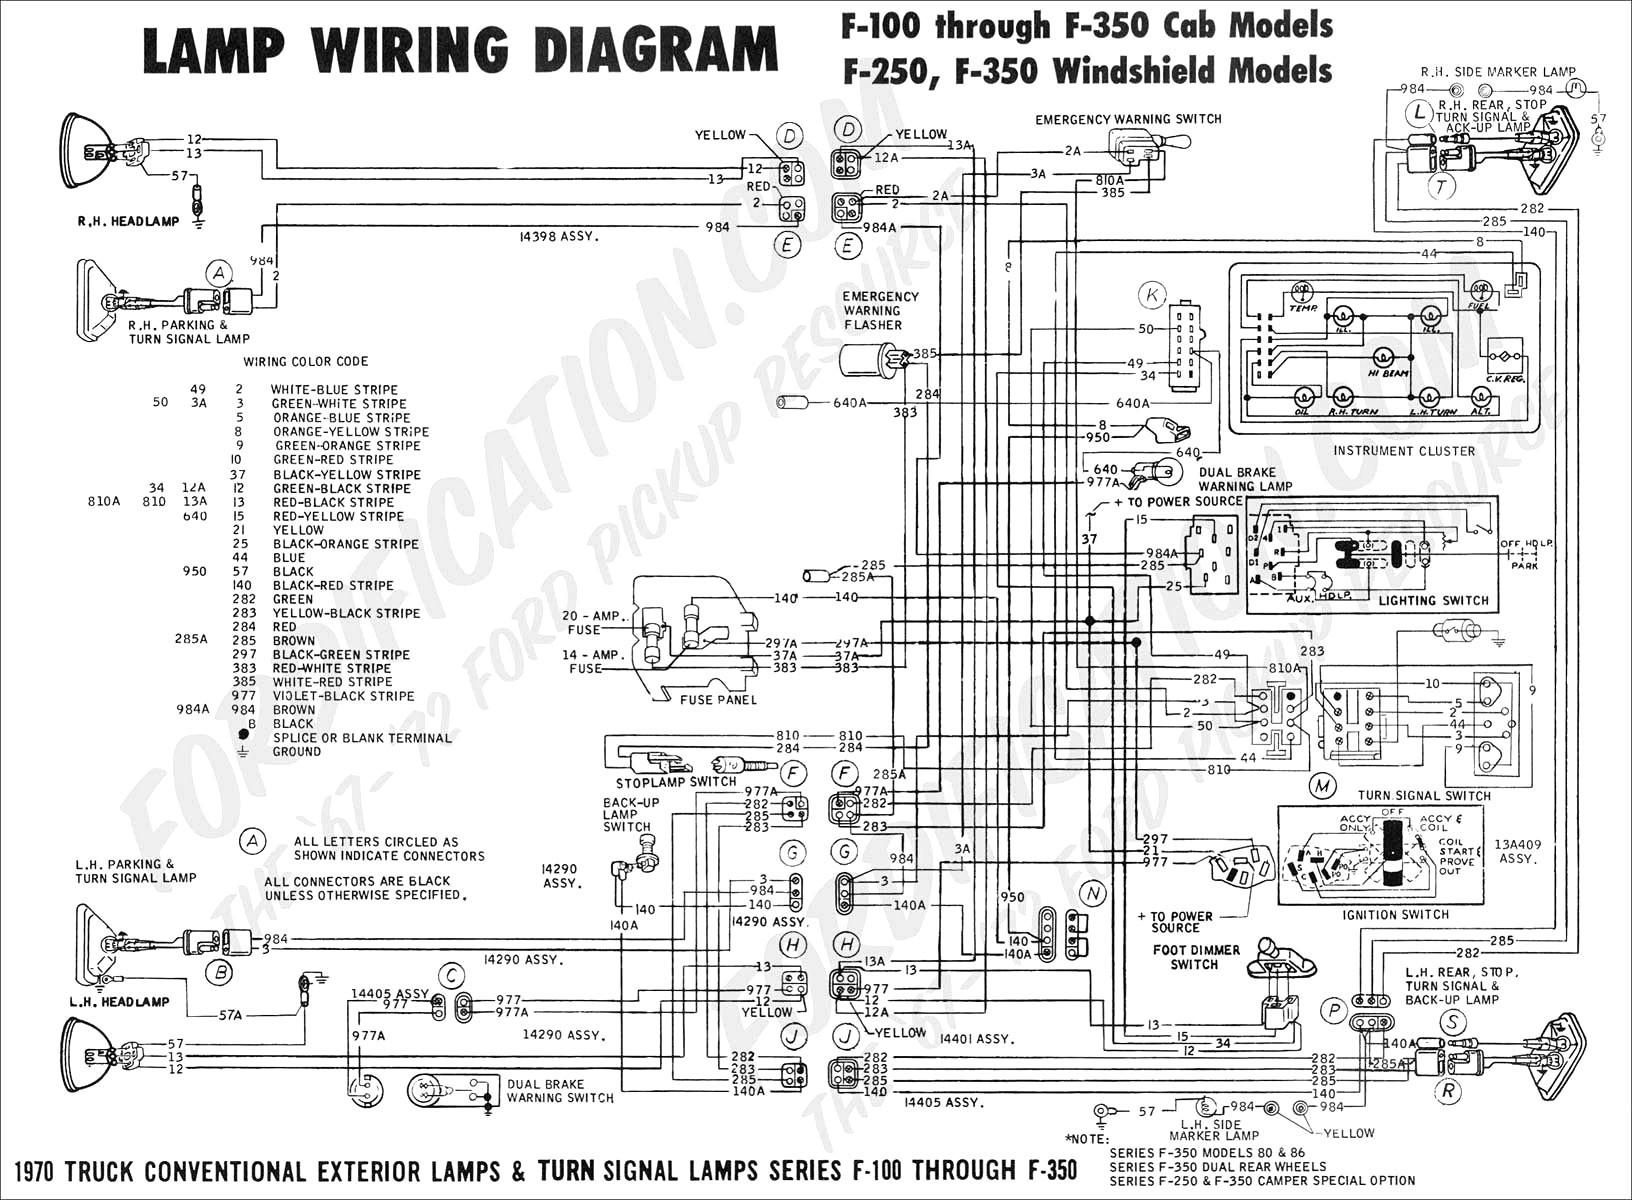 2002 isuzu Rodeo Engine Diagram 2435f 2004 ford Sport Trac Wiring Diagram Of 2002 isuzu Rodeo Engine Diagram